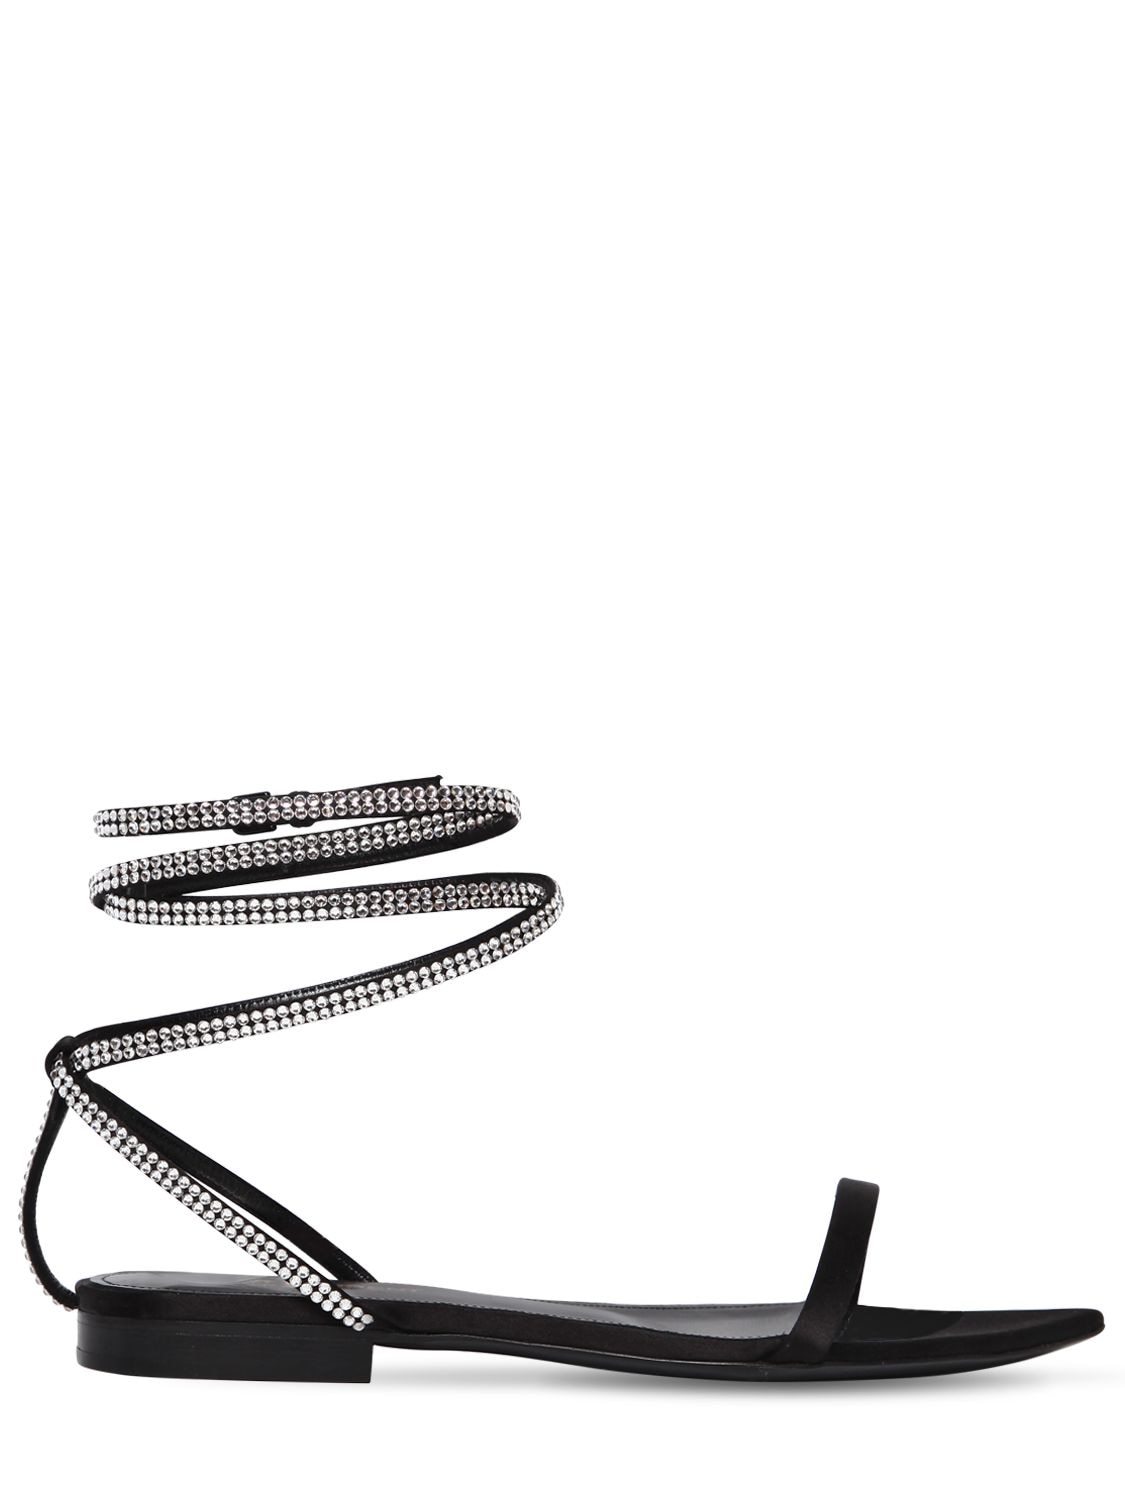 Saint Laurent 10mm Nu Pieds Swarovski Satin Sandals In Black | ModeSens